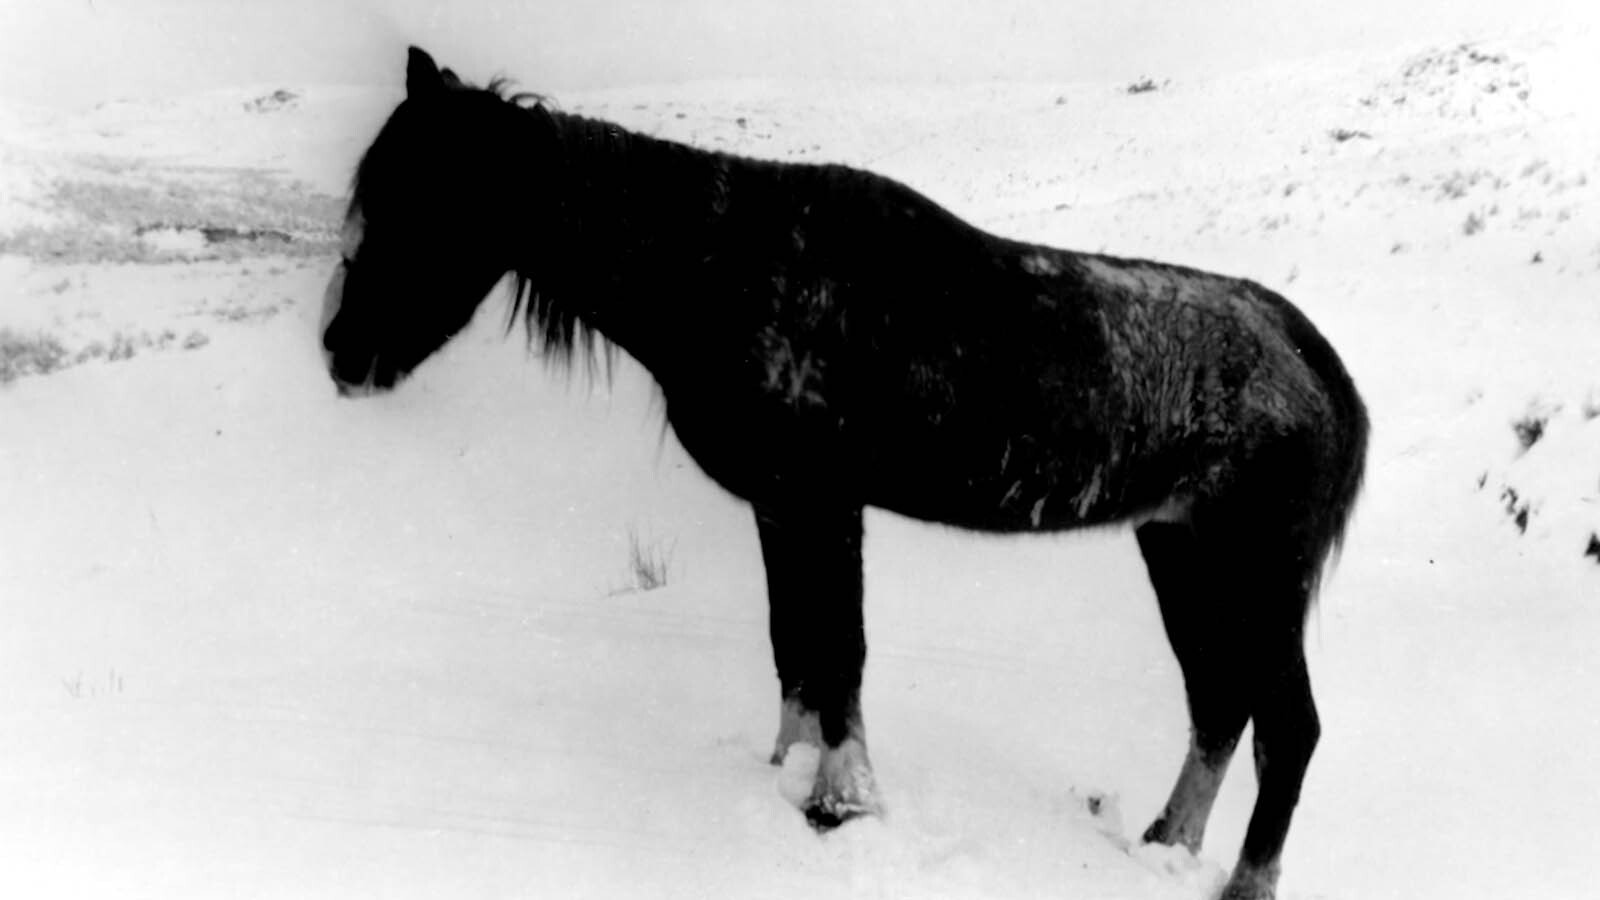 This horse was found frozen to death still standing upright.